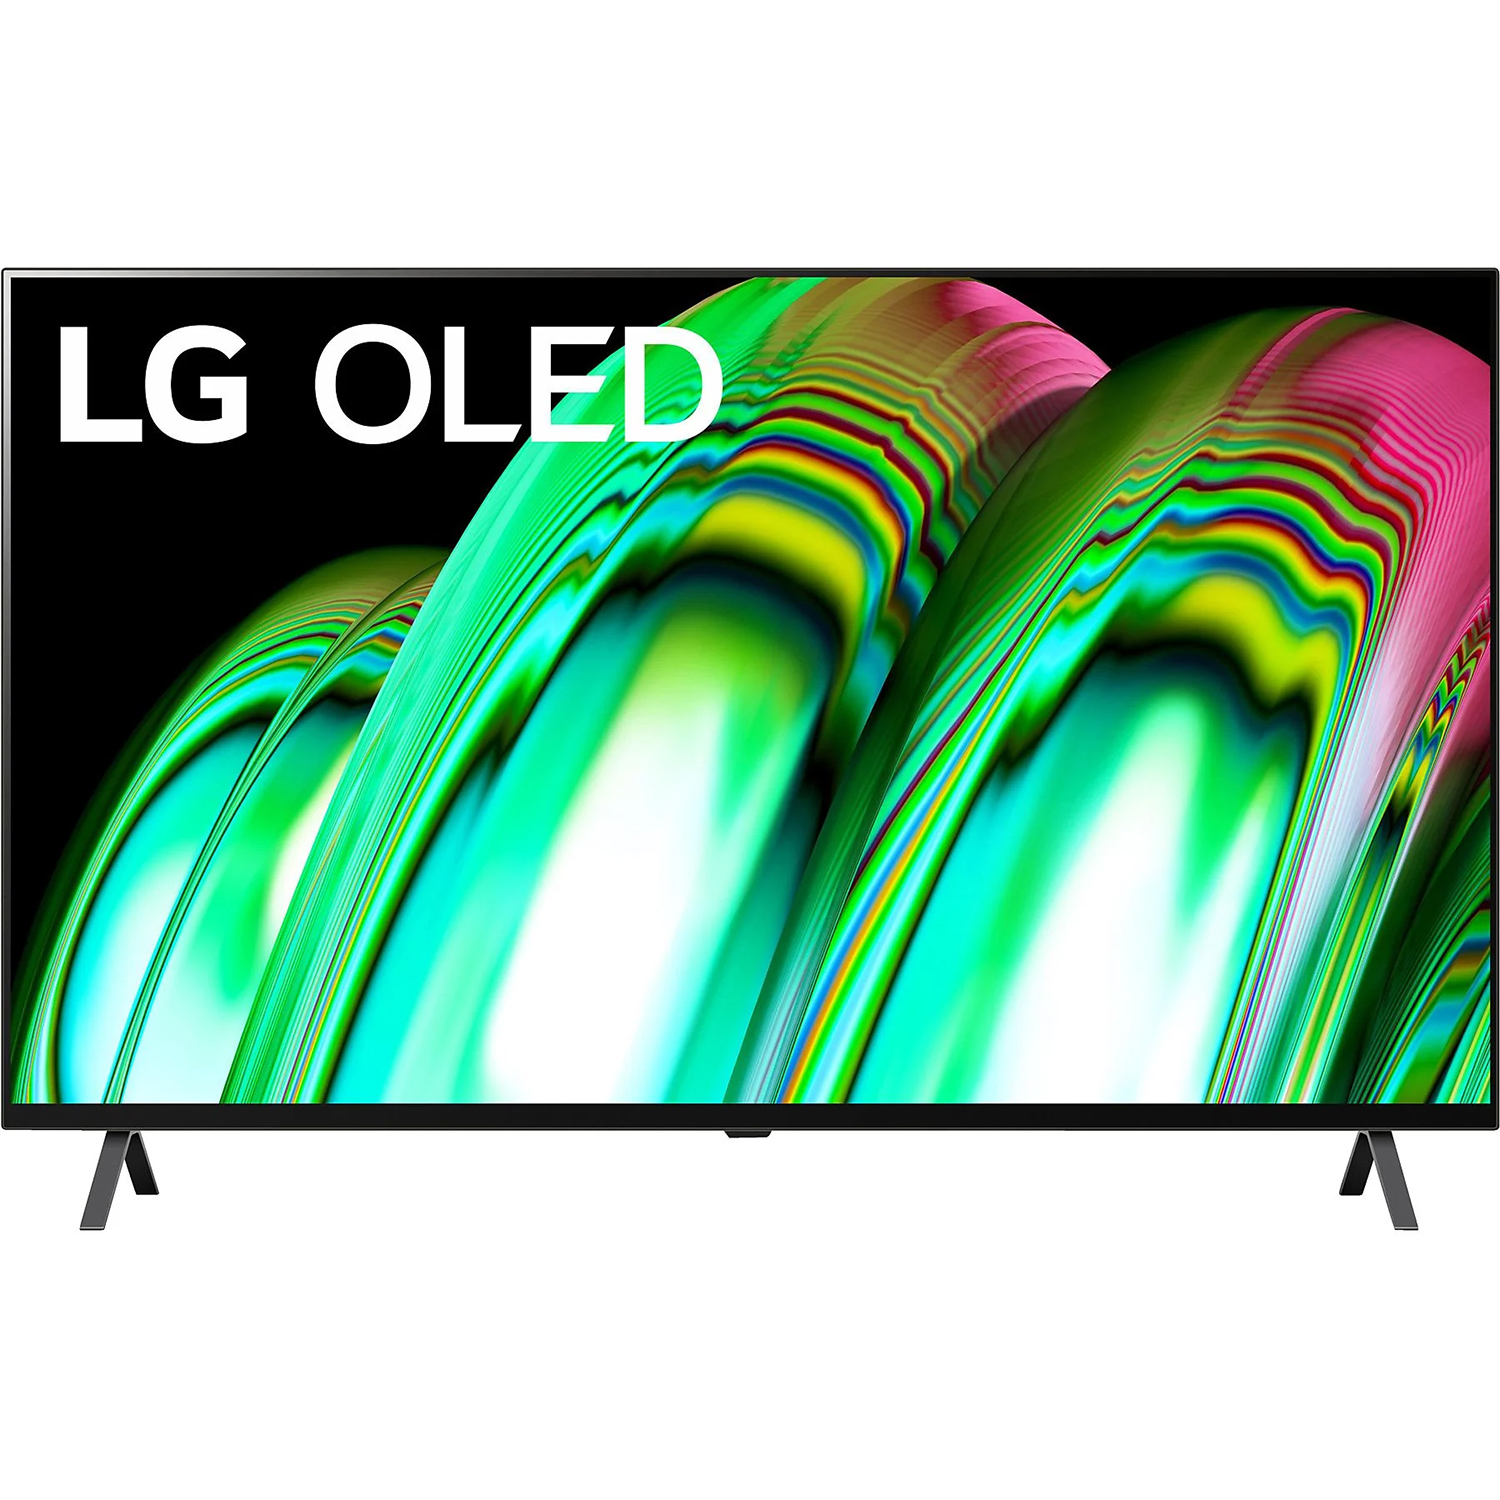 LG OLED Smart TV 48 Zoll (121 cm) 4k UHD Cinema HDR schwarz von LG